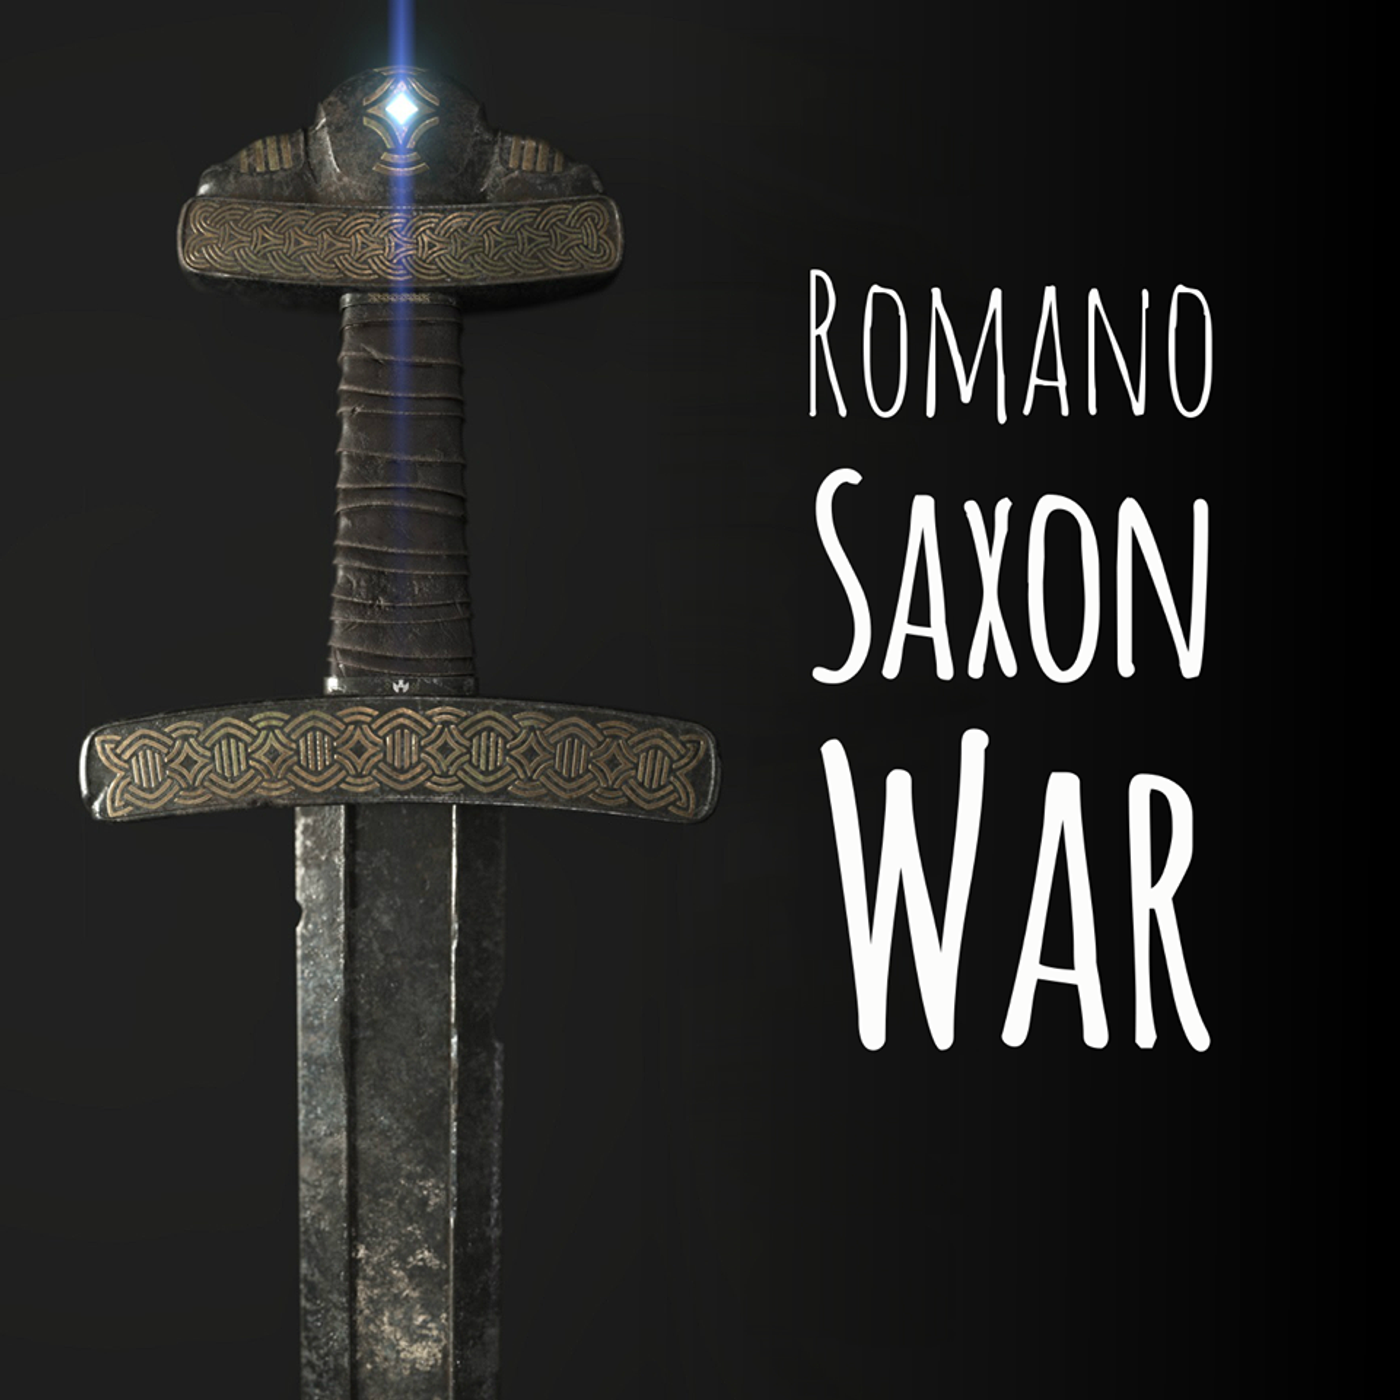 Romano Saxon War, Part 10